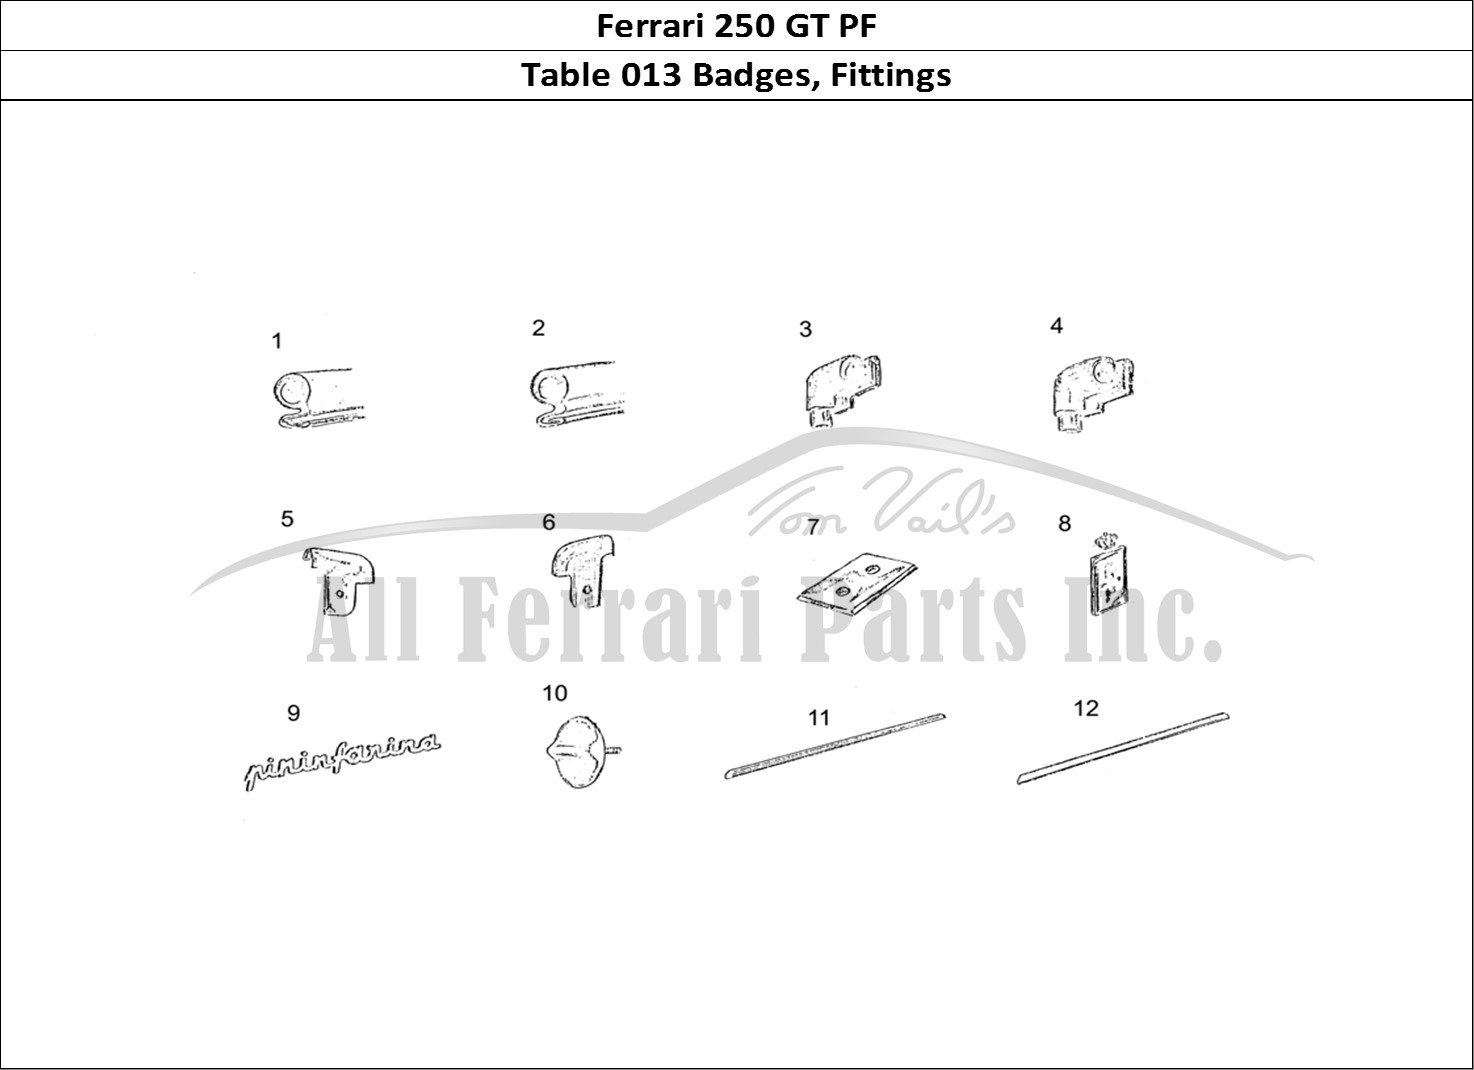 Ferrari Parts Ferrari 250 GT (Coachwork) Page 013 Badges and Fittings